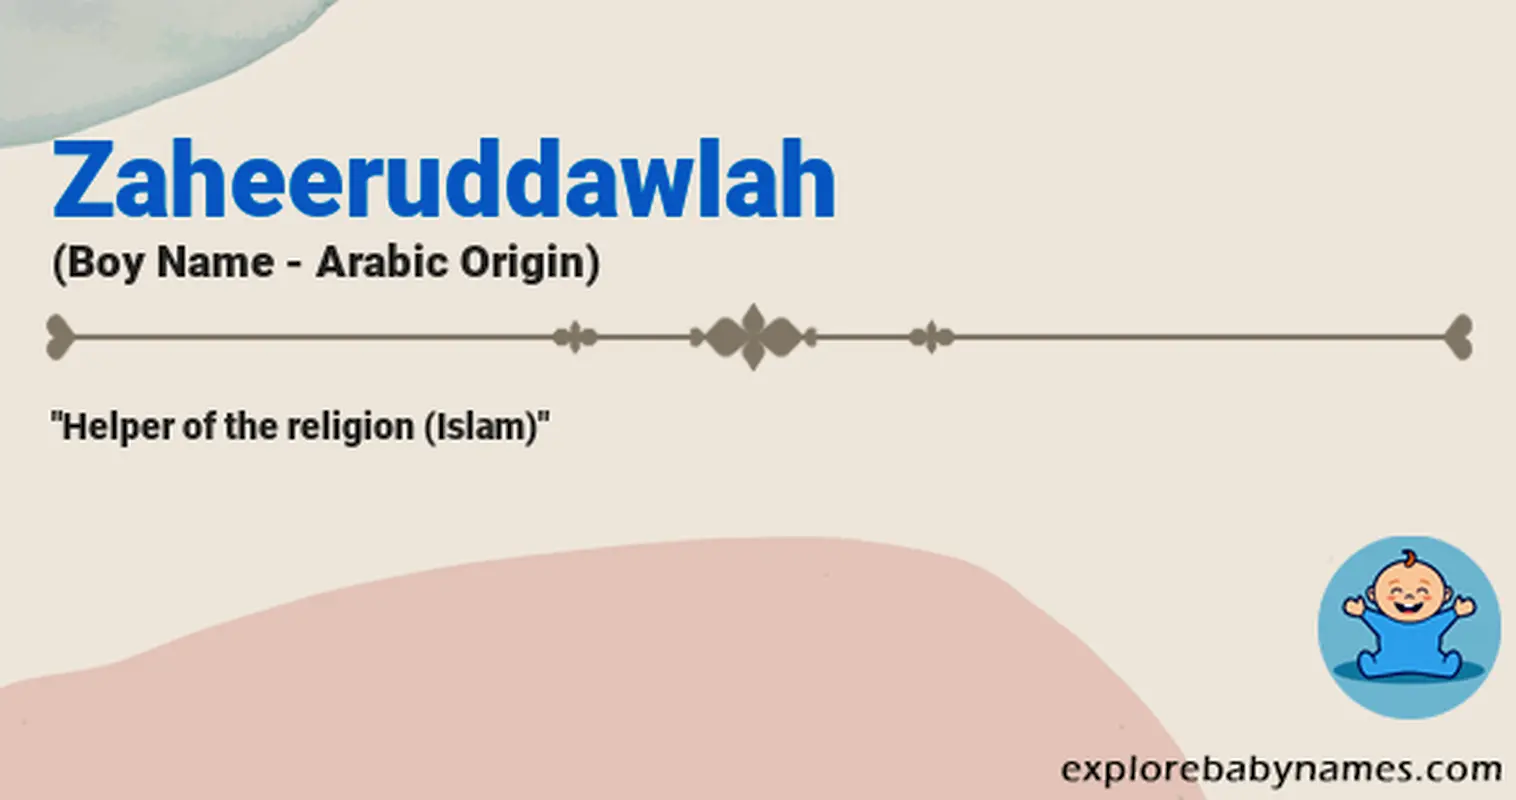 Meaning of Zaheeruddawlah